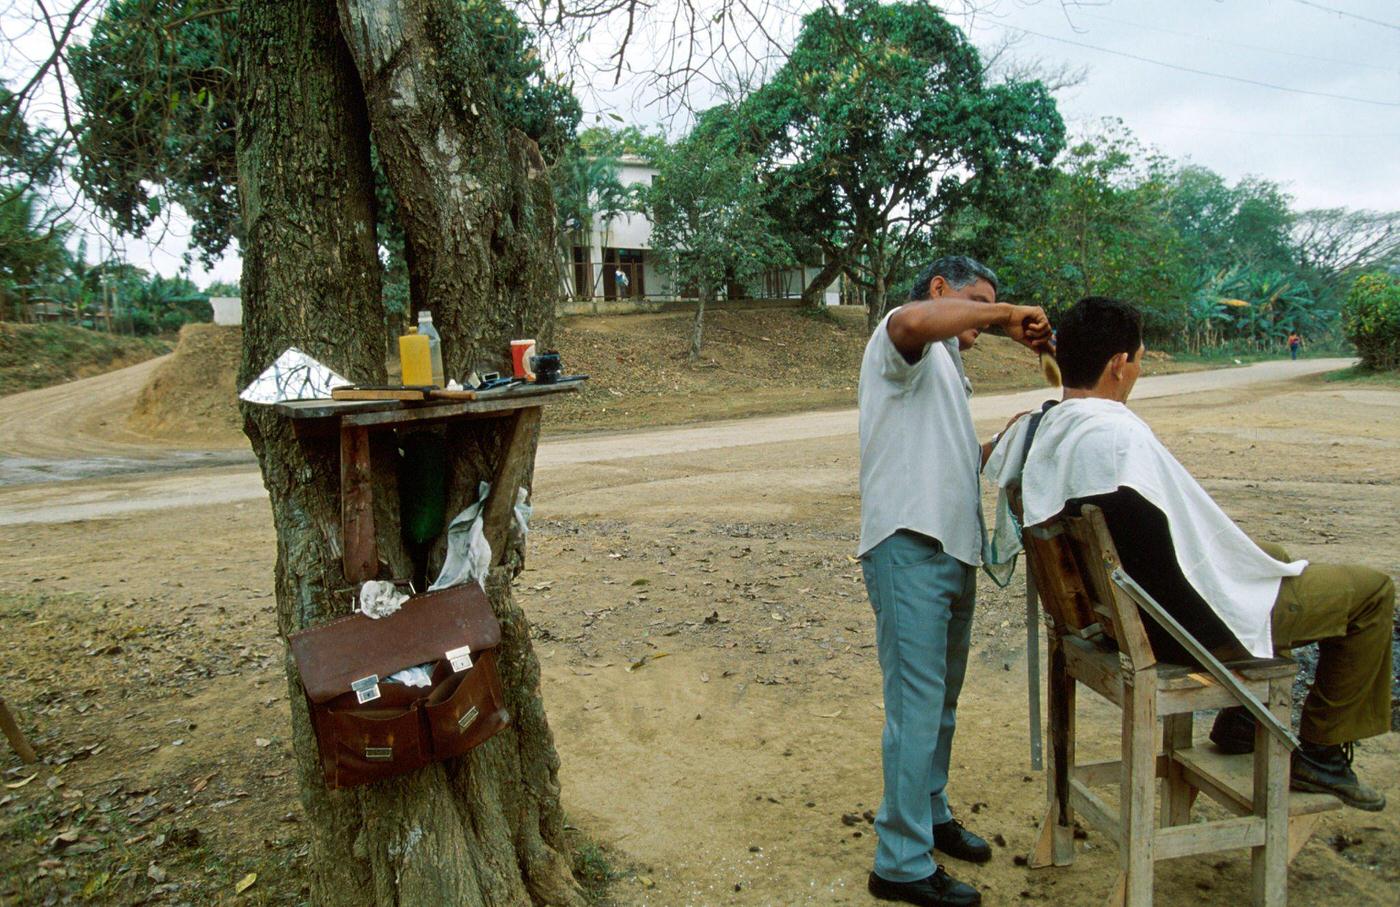 Cuban man combing a Cuban boy's hair beside a tree trunk, Cuba, 1990.